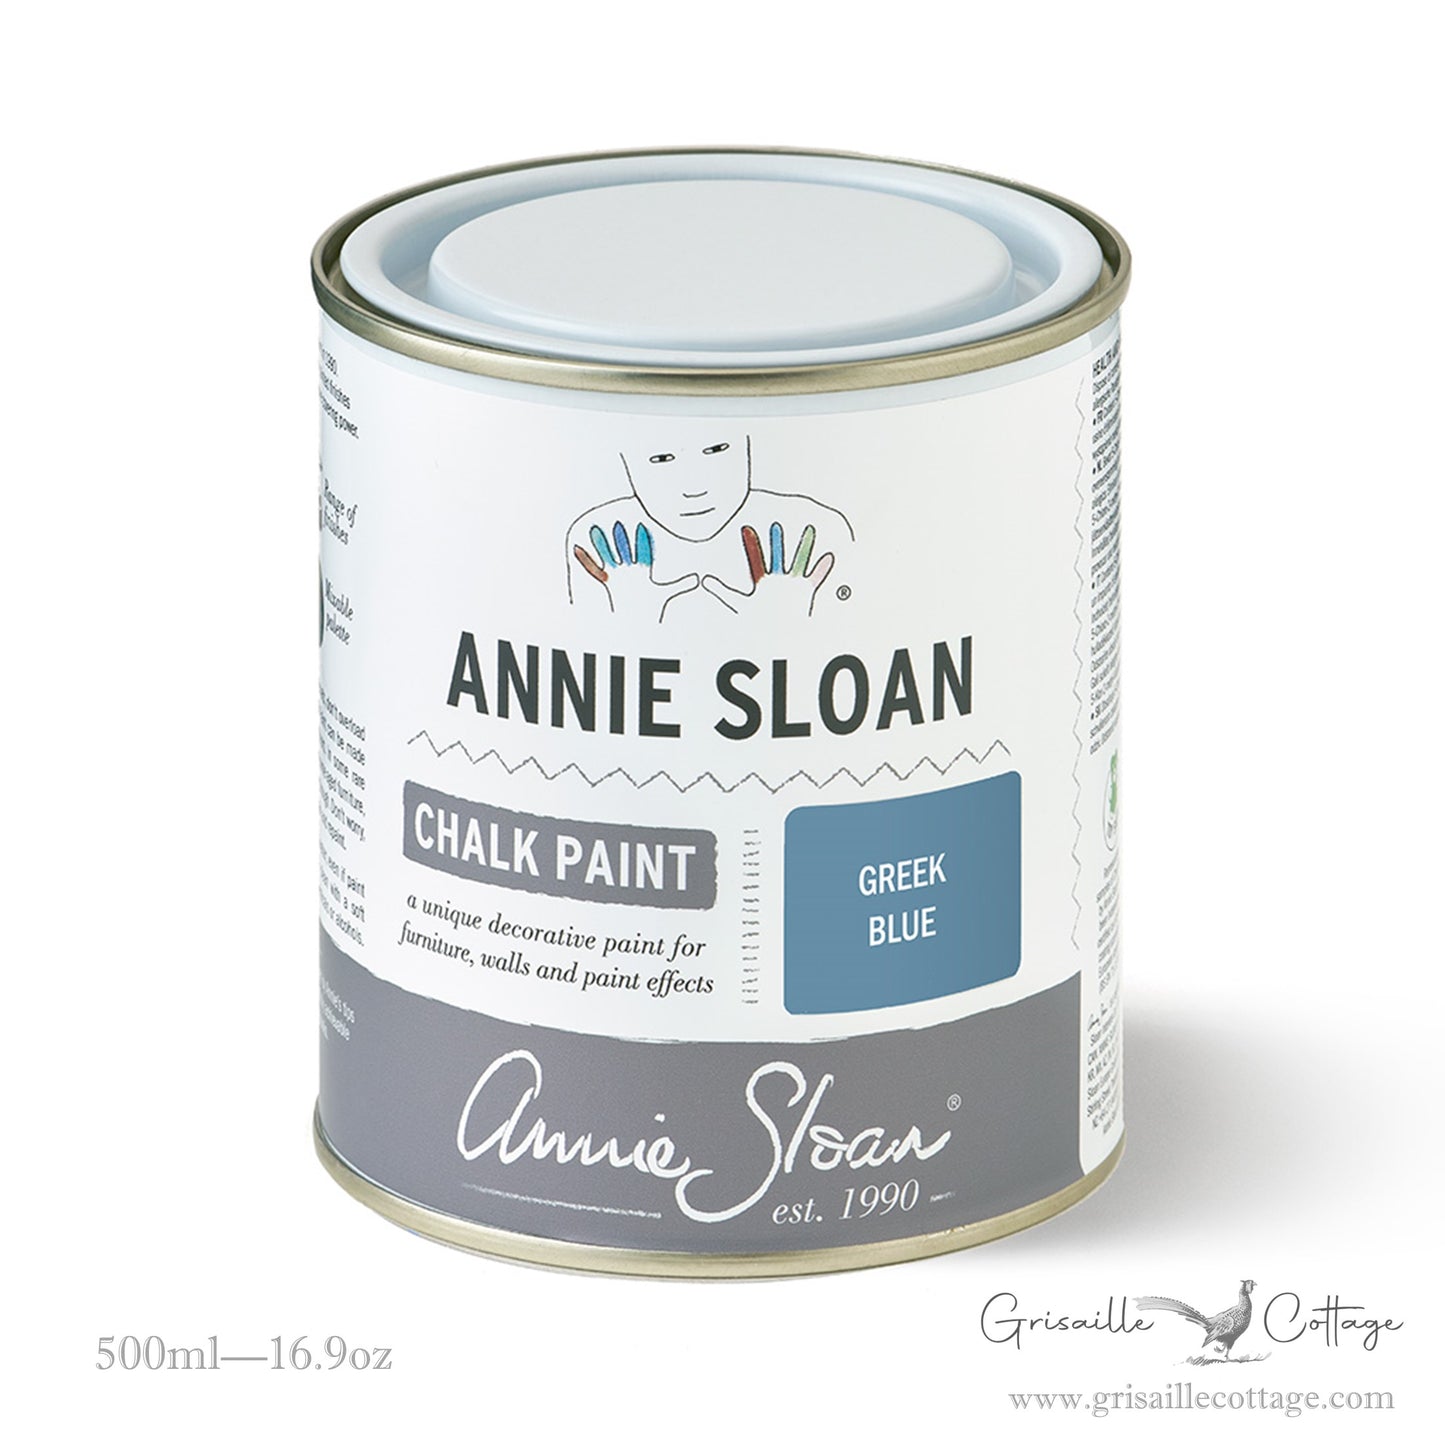 Greek Blue - Annie Sloan Chalk Paint